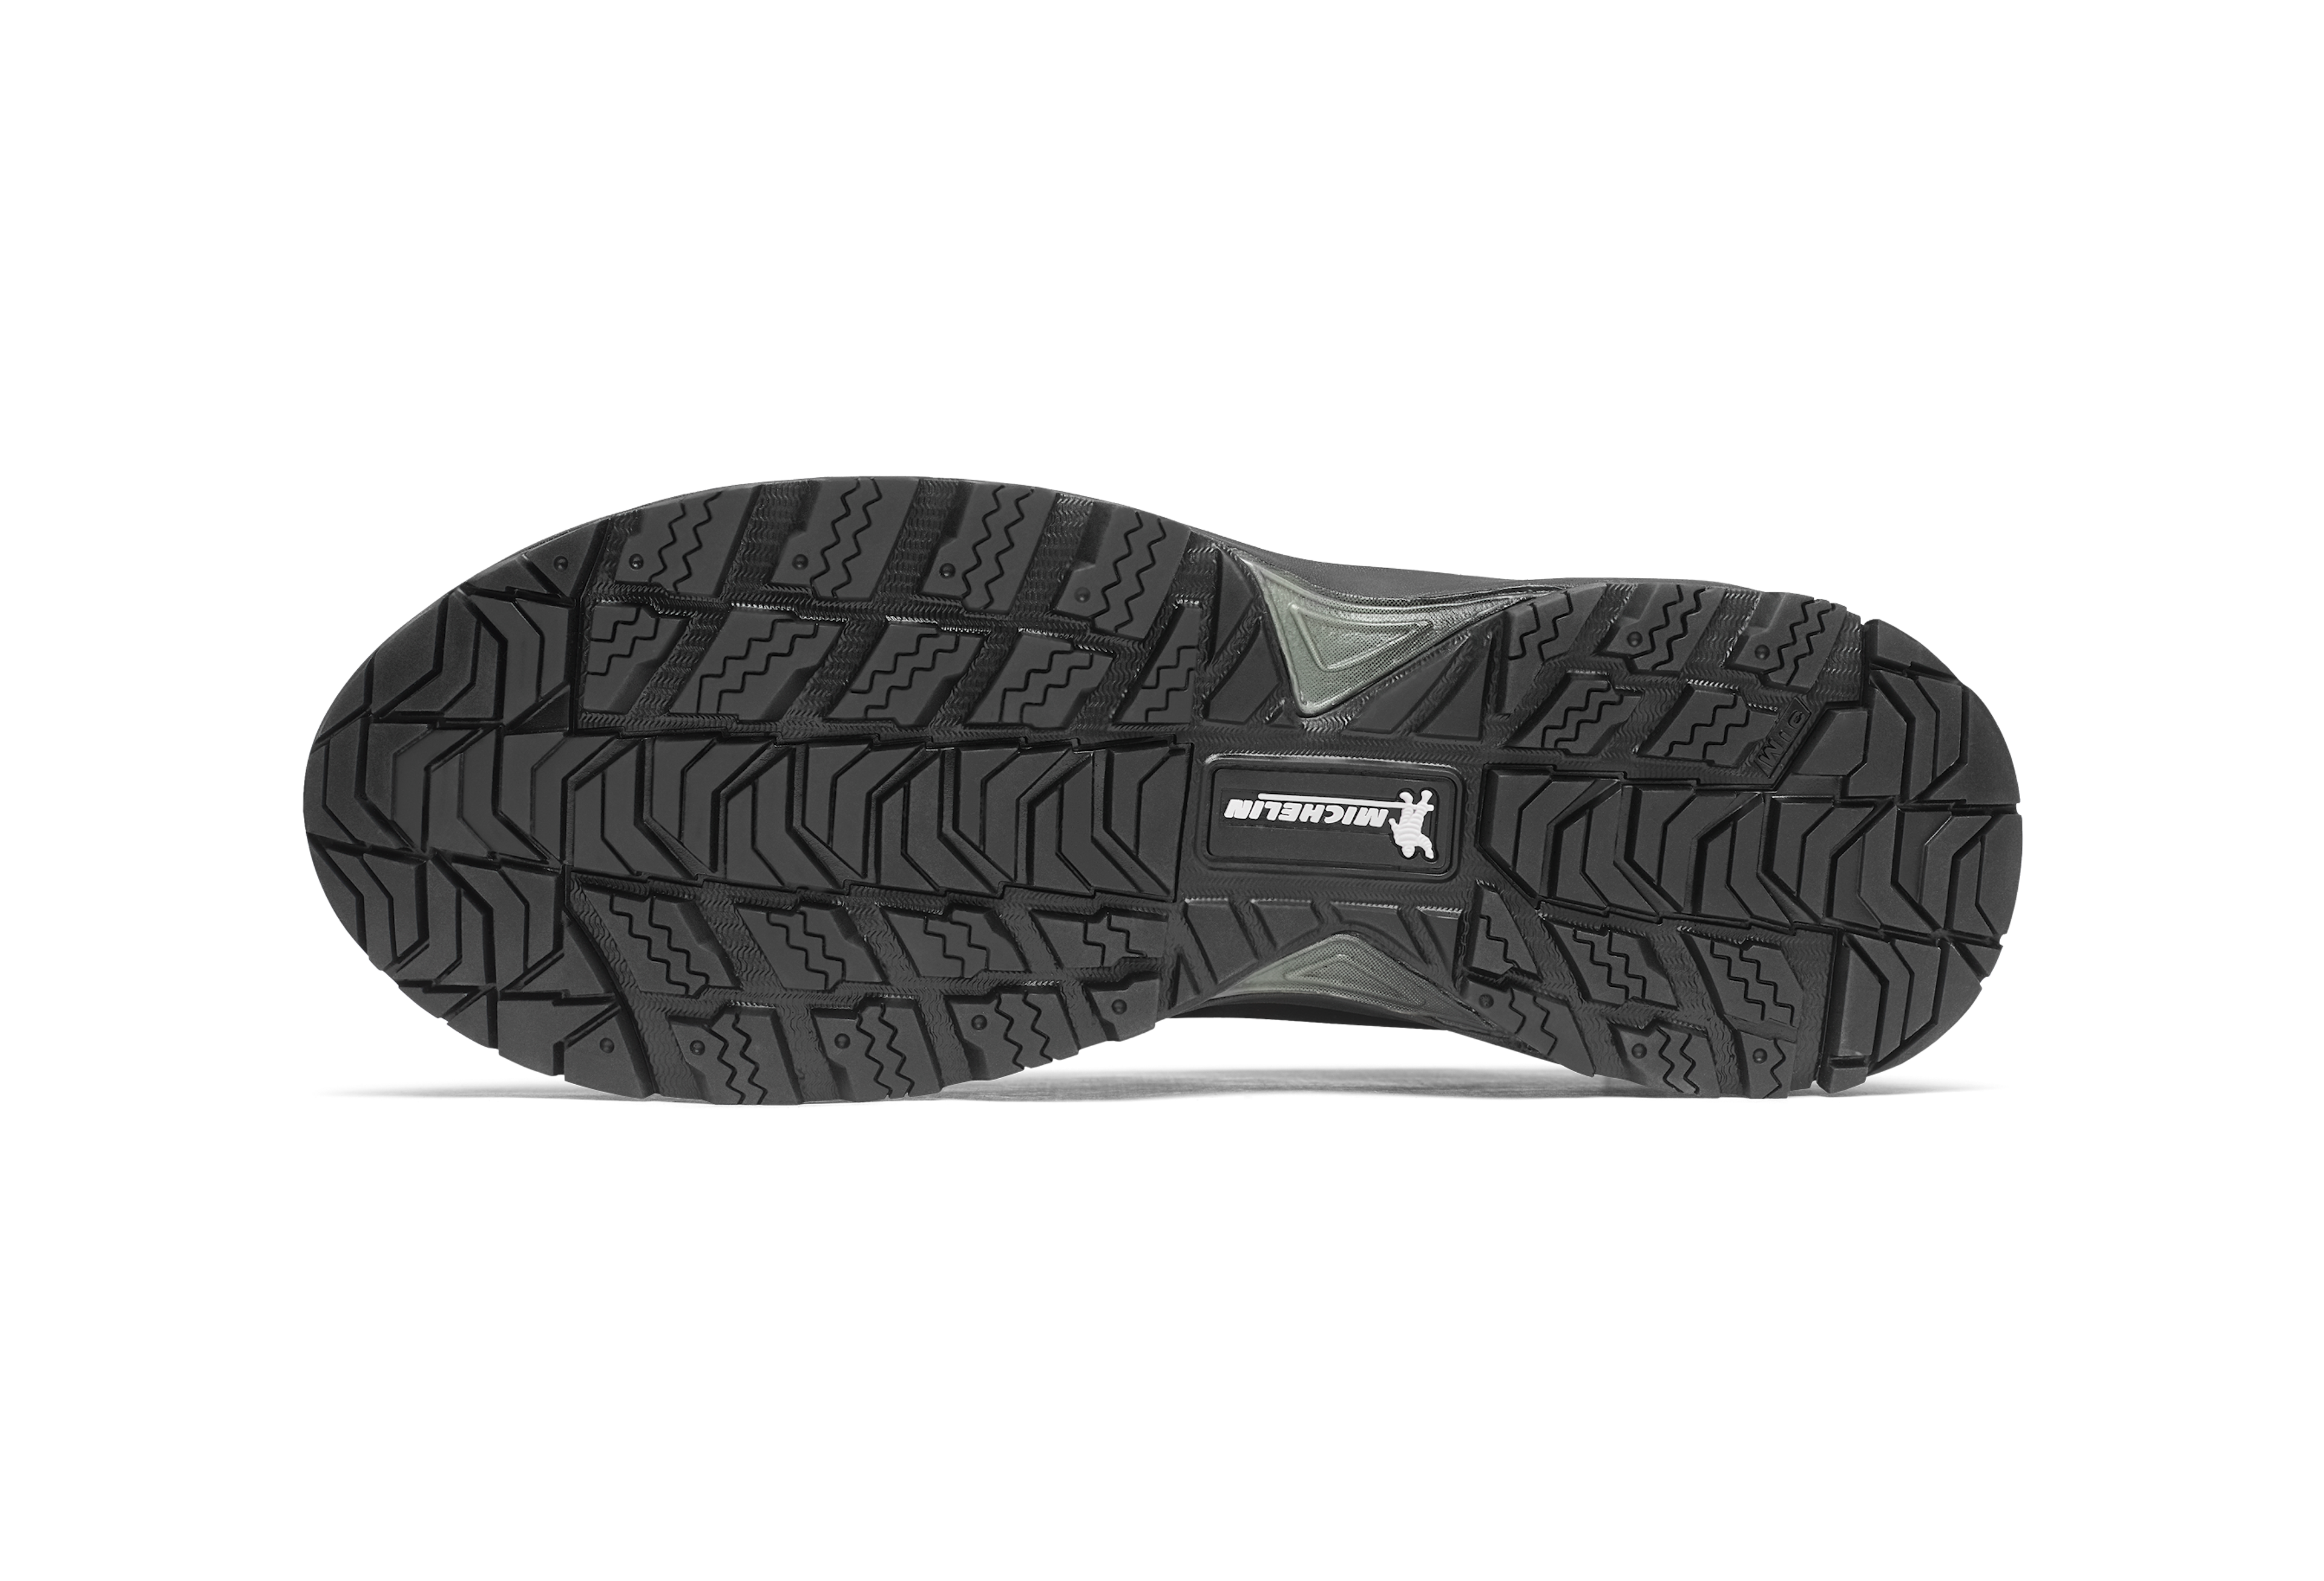 Stavre Men's Michelin GTX - Black/Petroleum